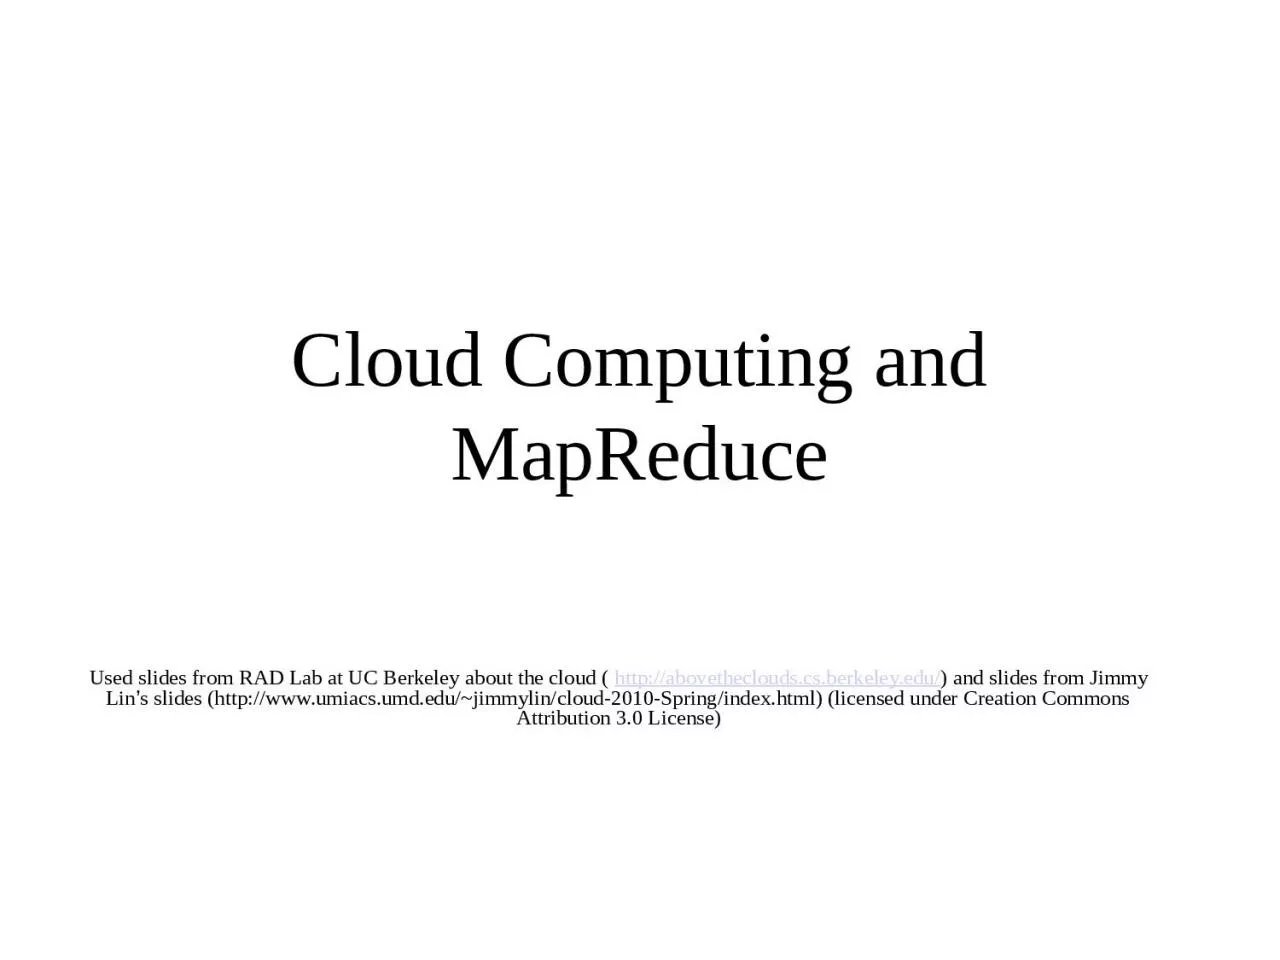 Cloud Computing and MapReduce